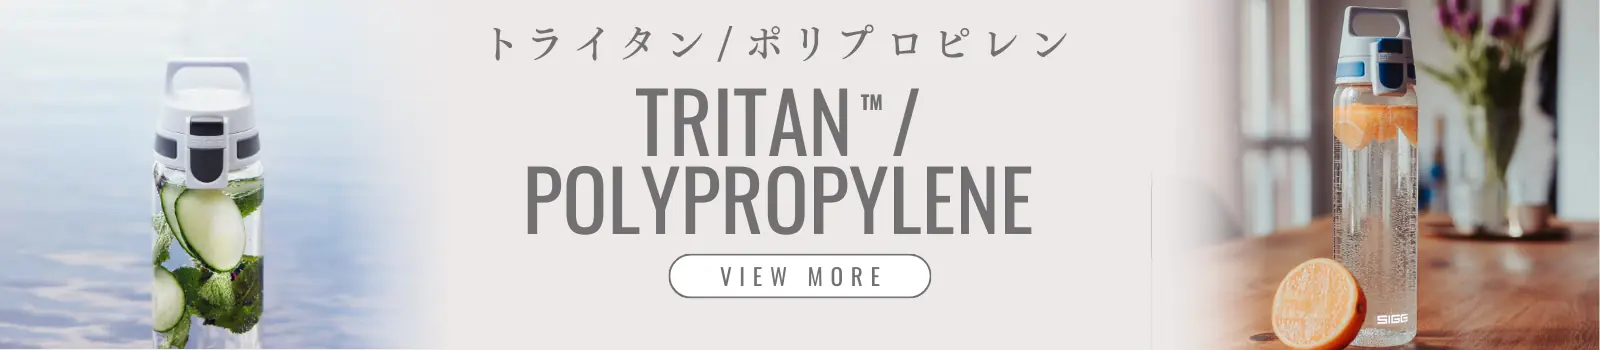 TRIAN / POLYPROPYLENE トライタン/ポリプロピレン 一覧を見る